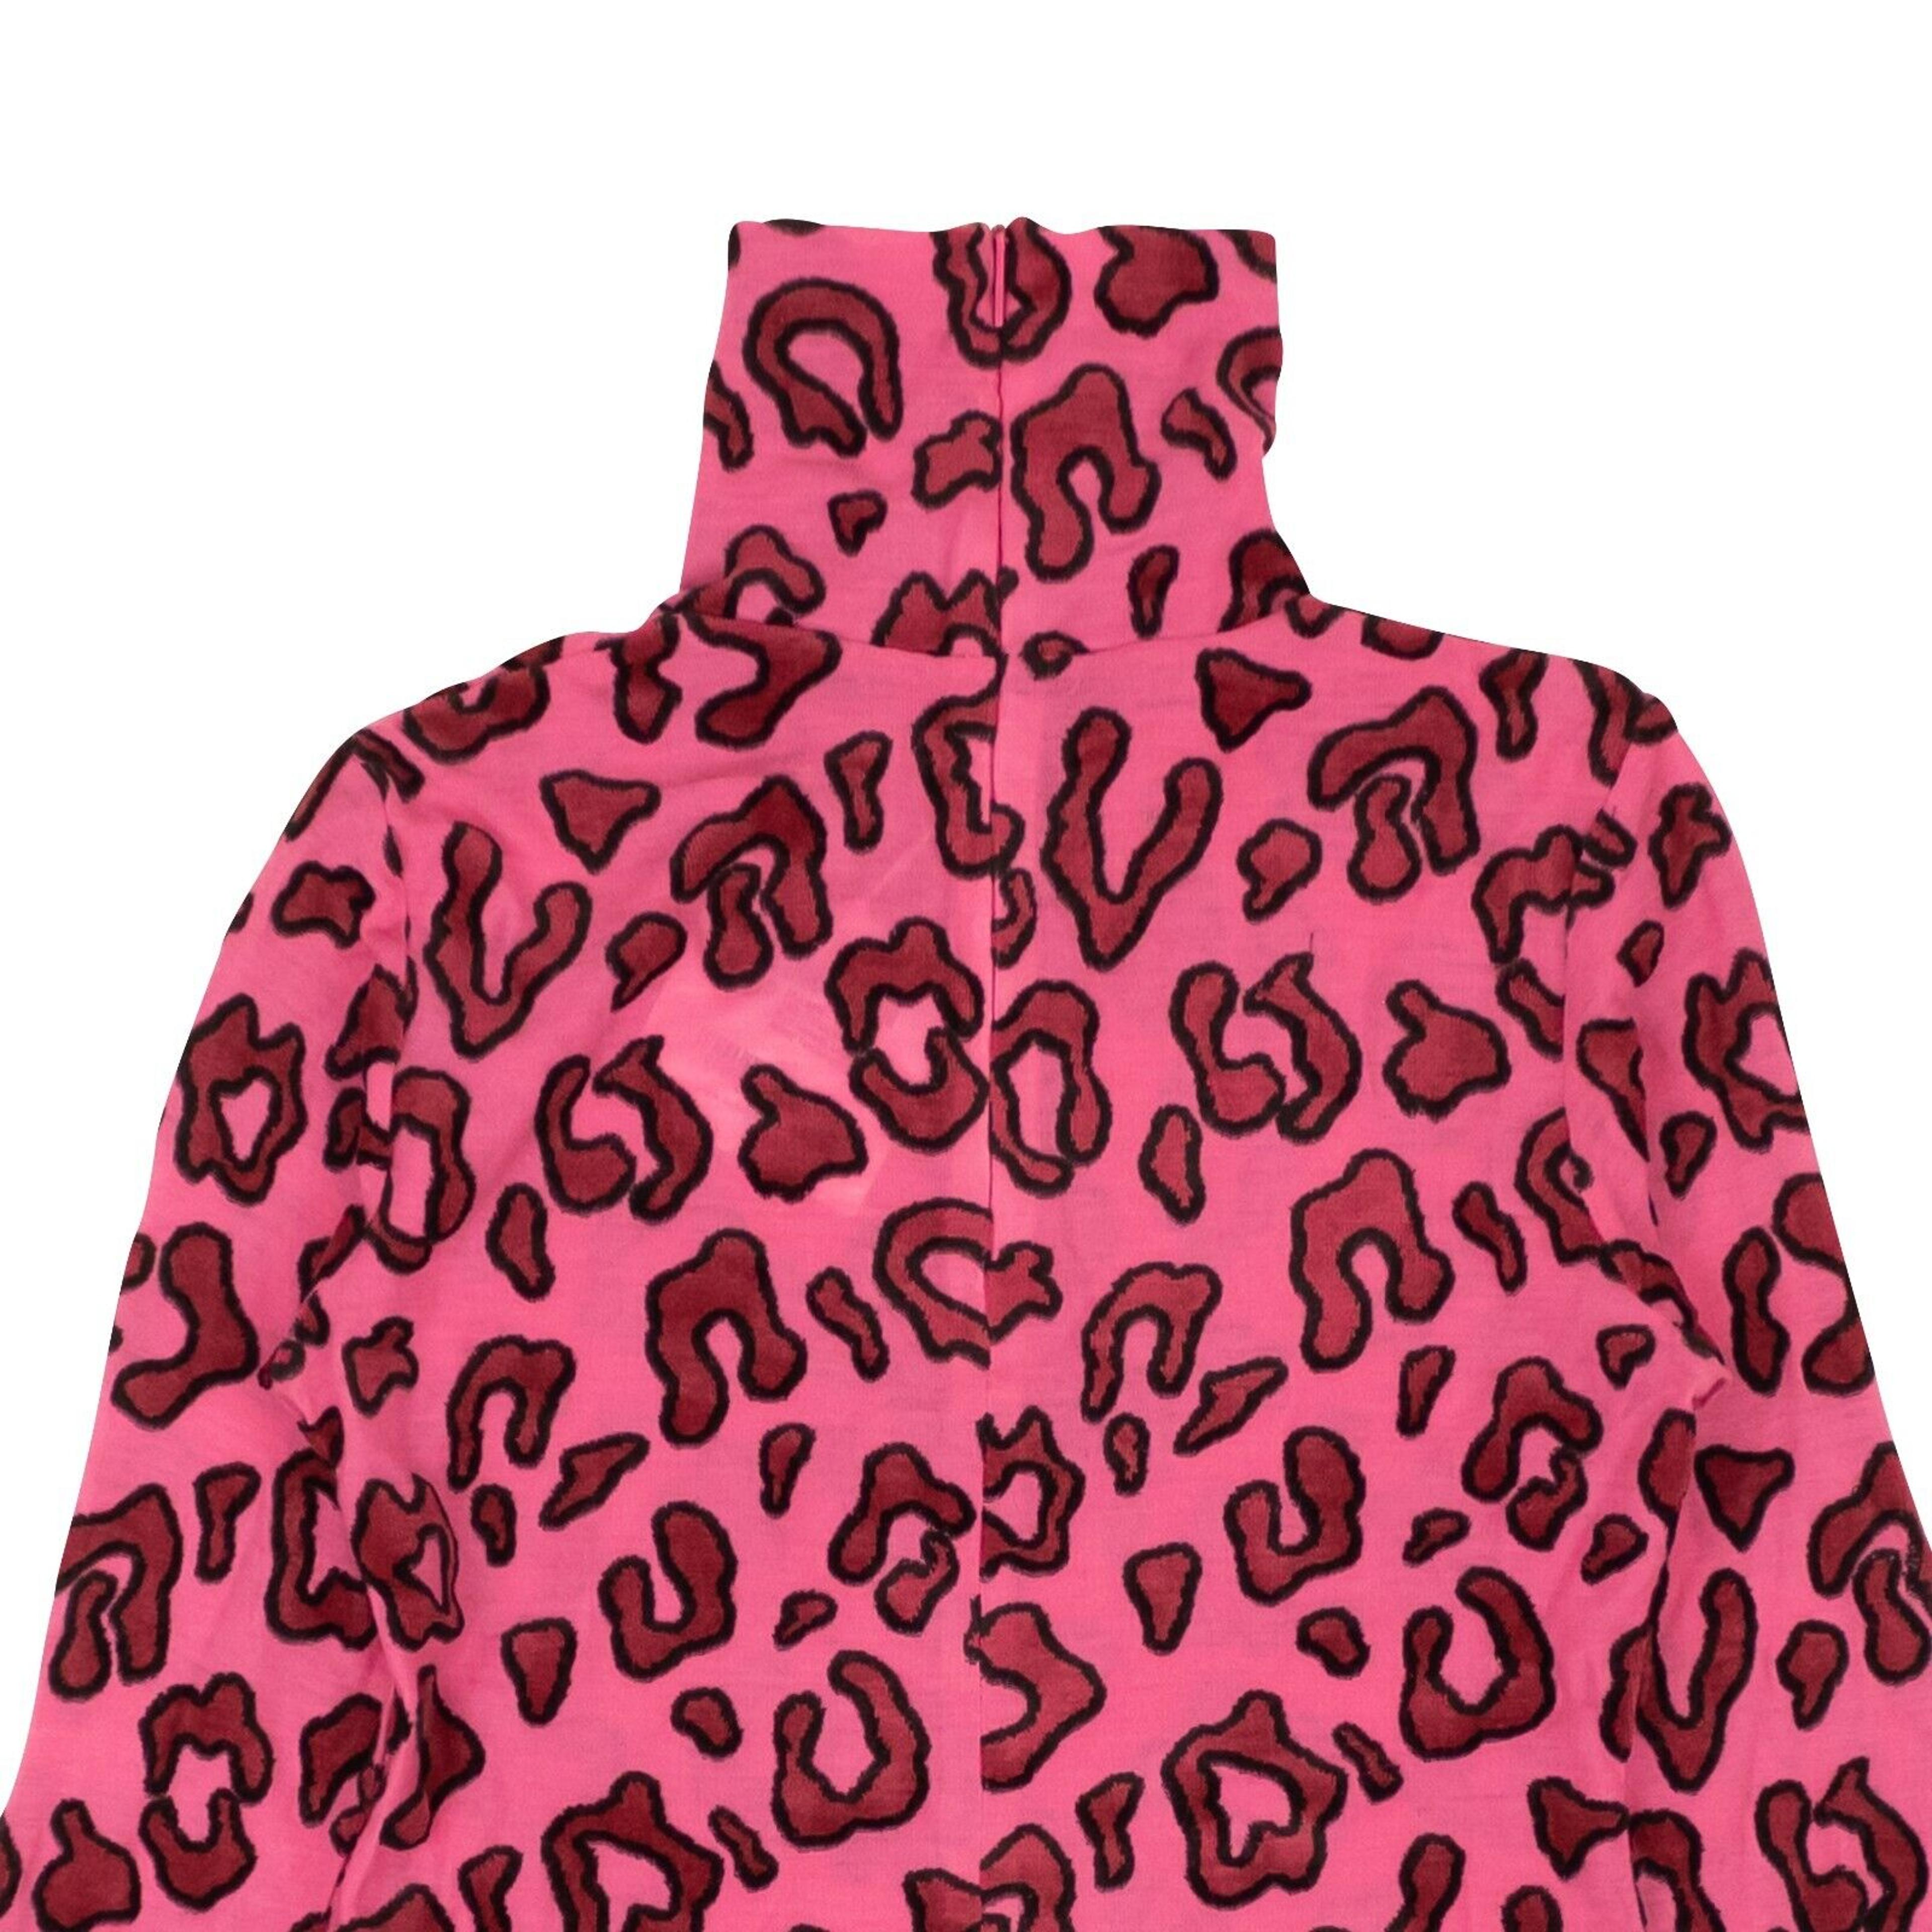 Alternate View 3 of Pink Acrylic Wool Leopard Print Turtleneck Top